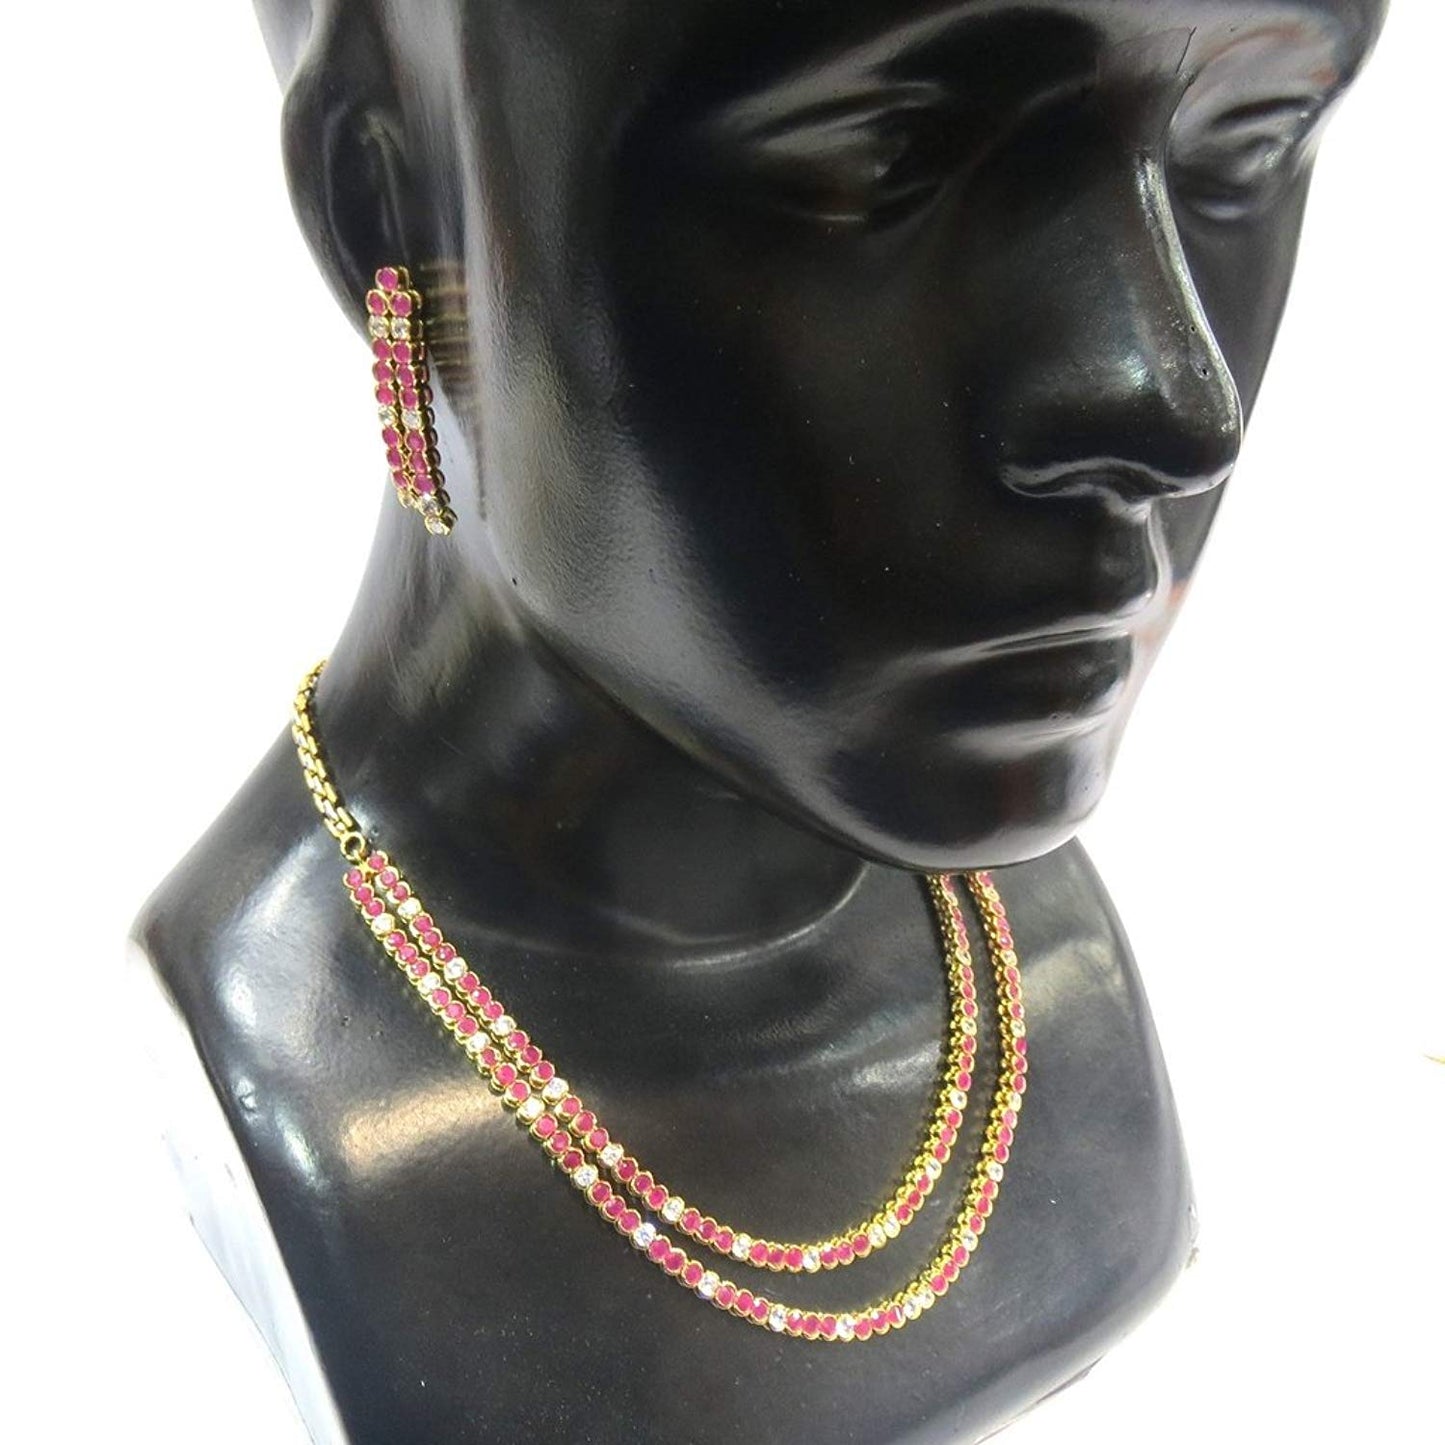 Jewelshingar Jewellery American Diamond Necklace Set For Girls ( 17401-nad-ruby )